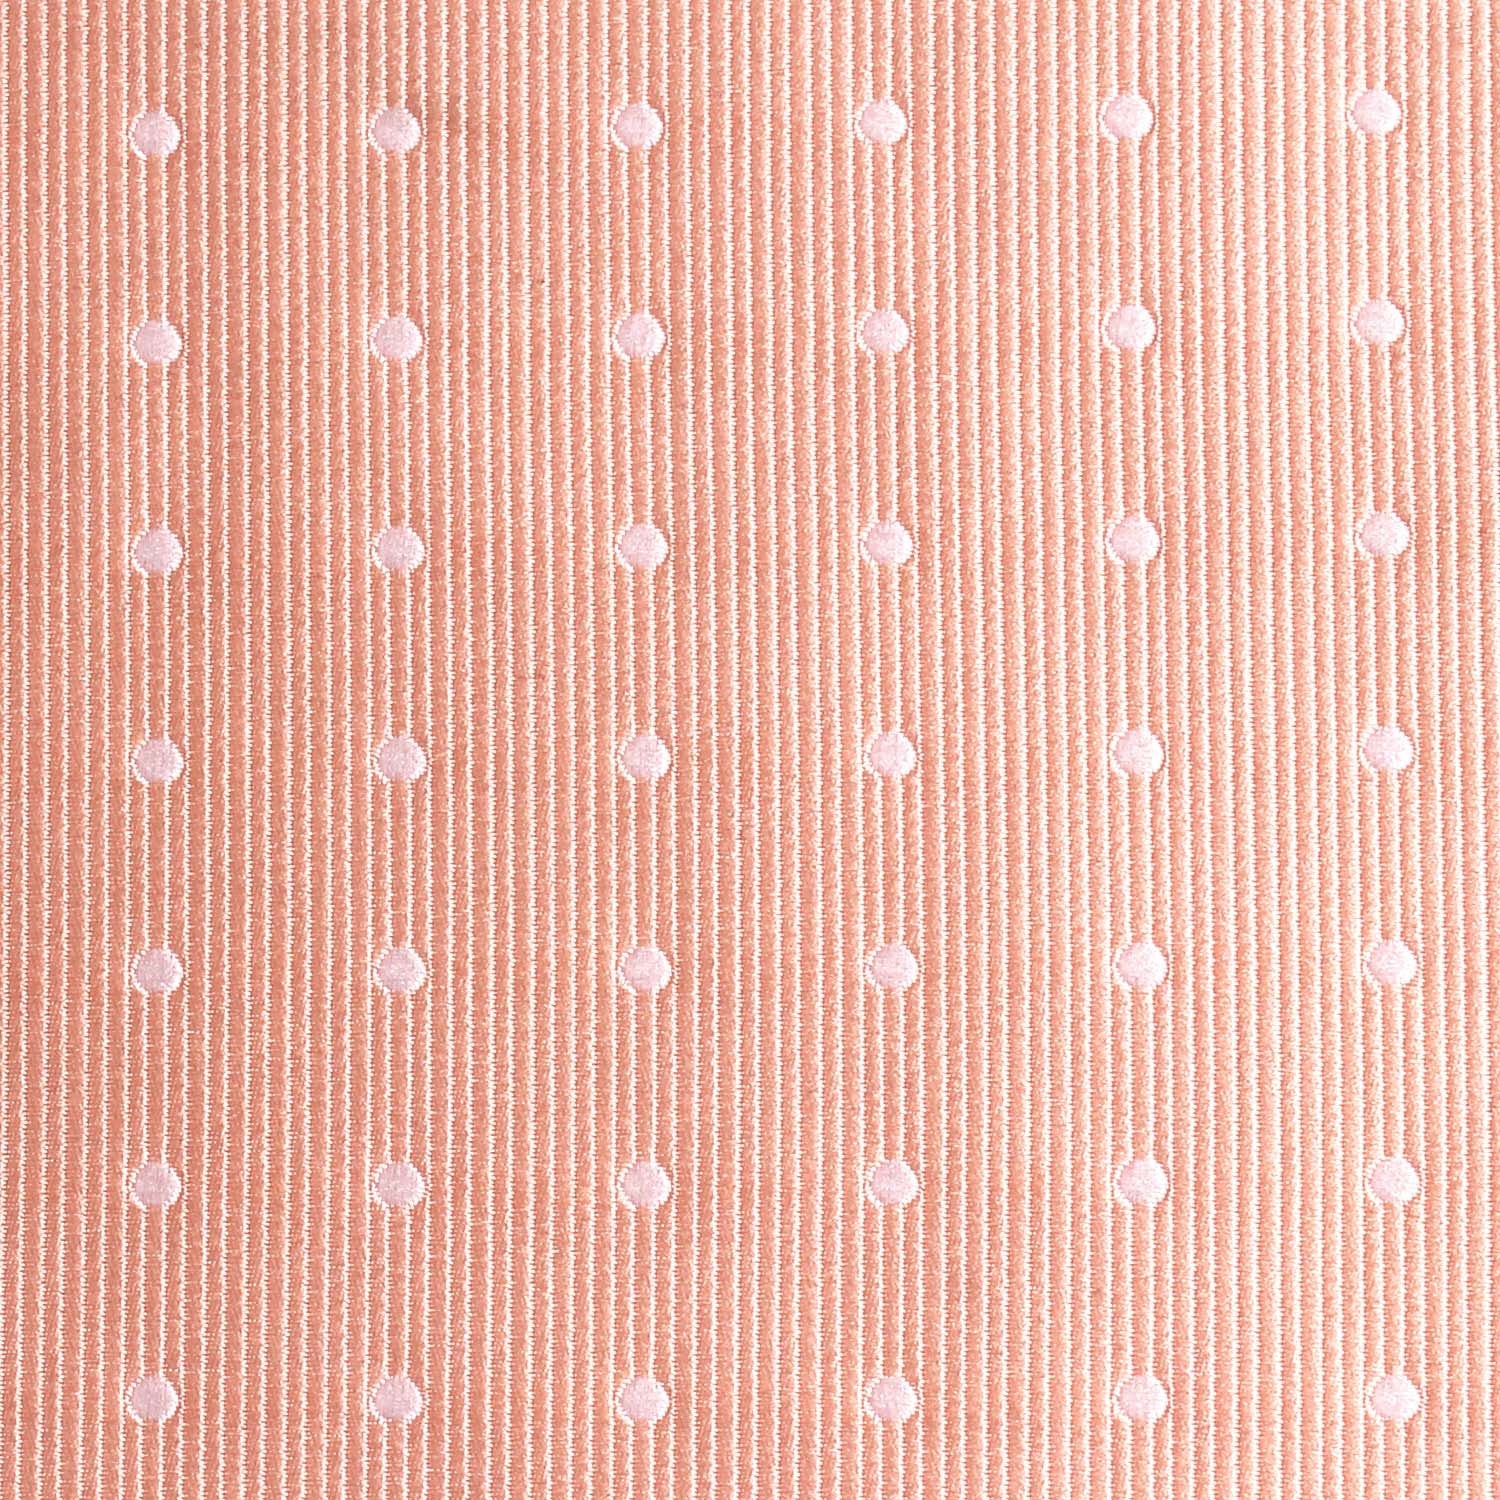 Peach with White Polka Dots Necktie